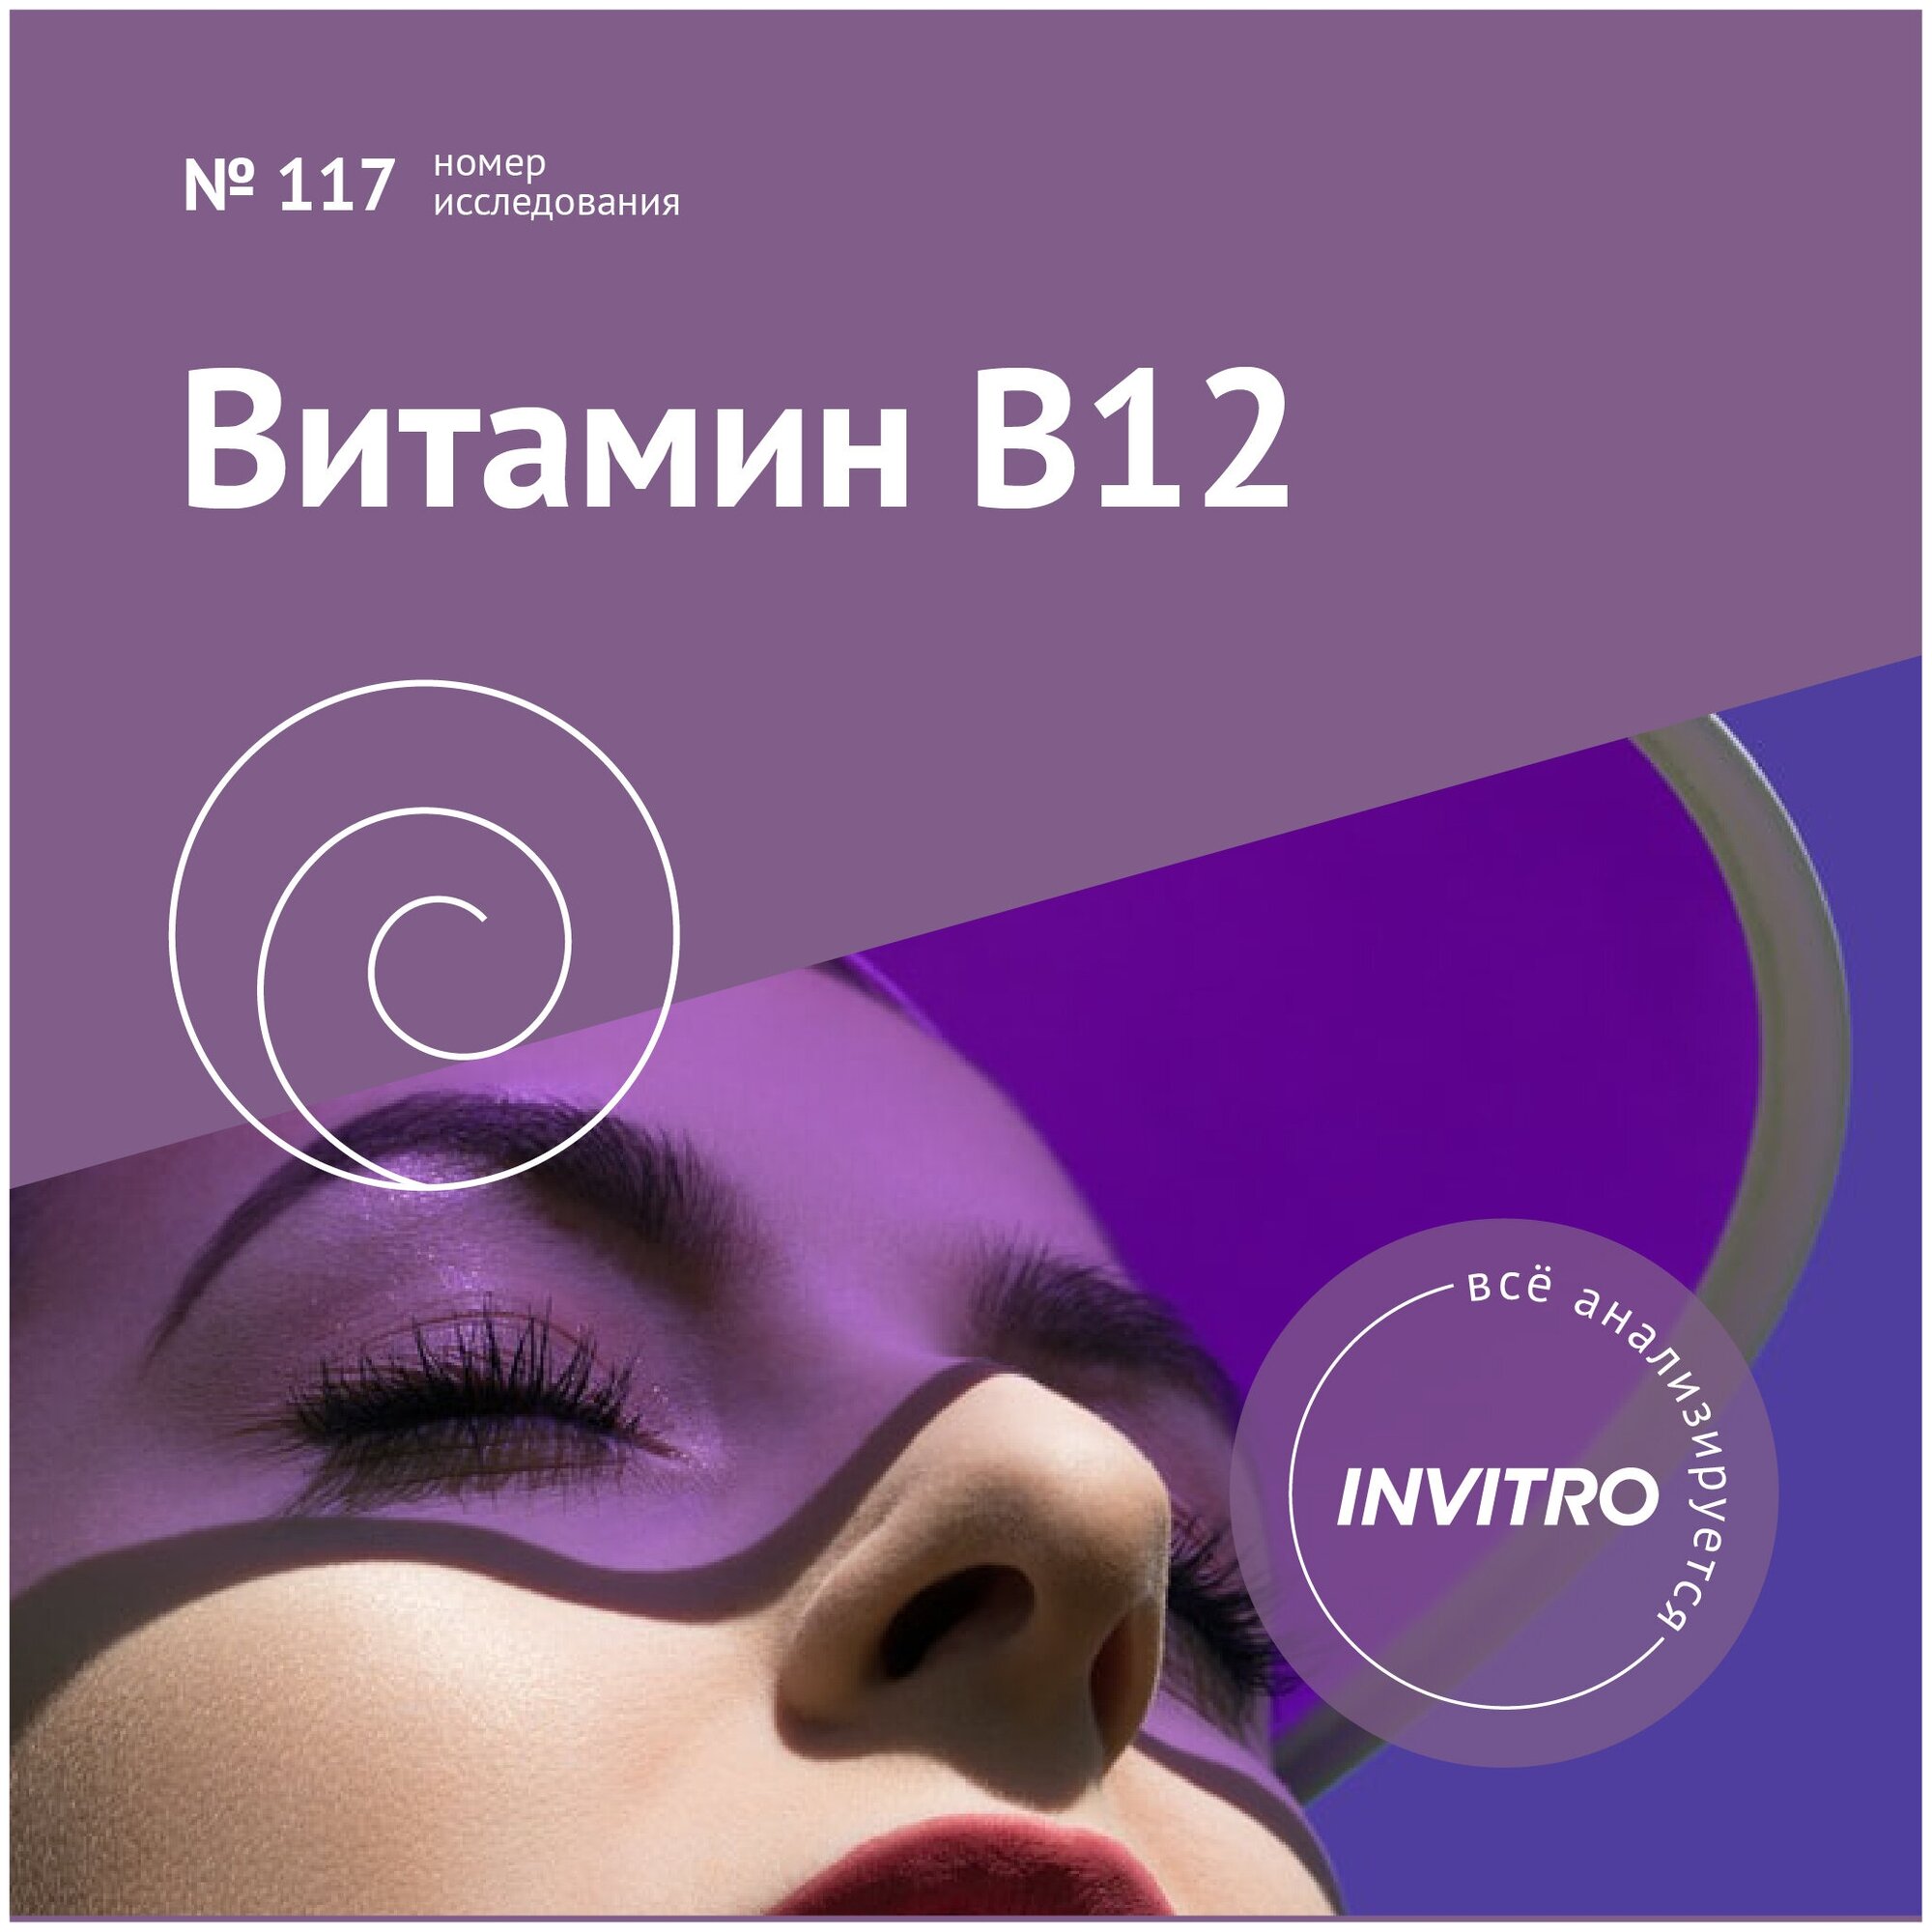 Сертификат INVITRO Витамин B12